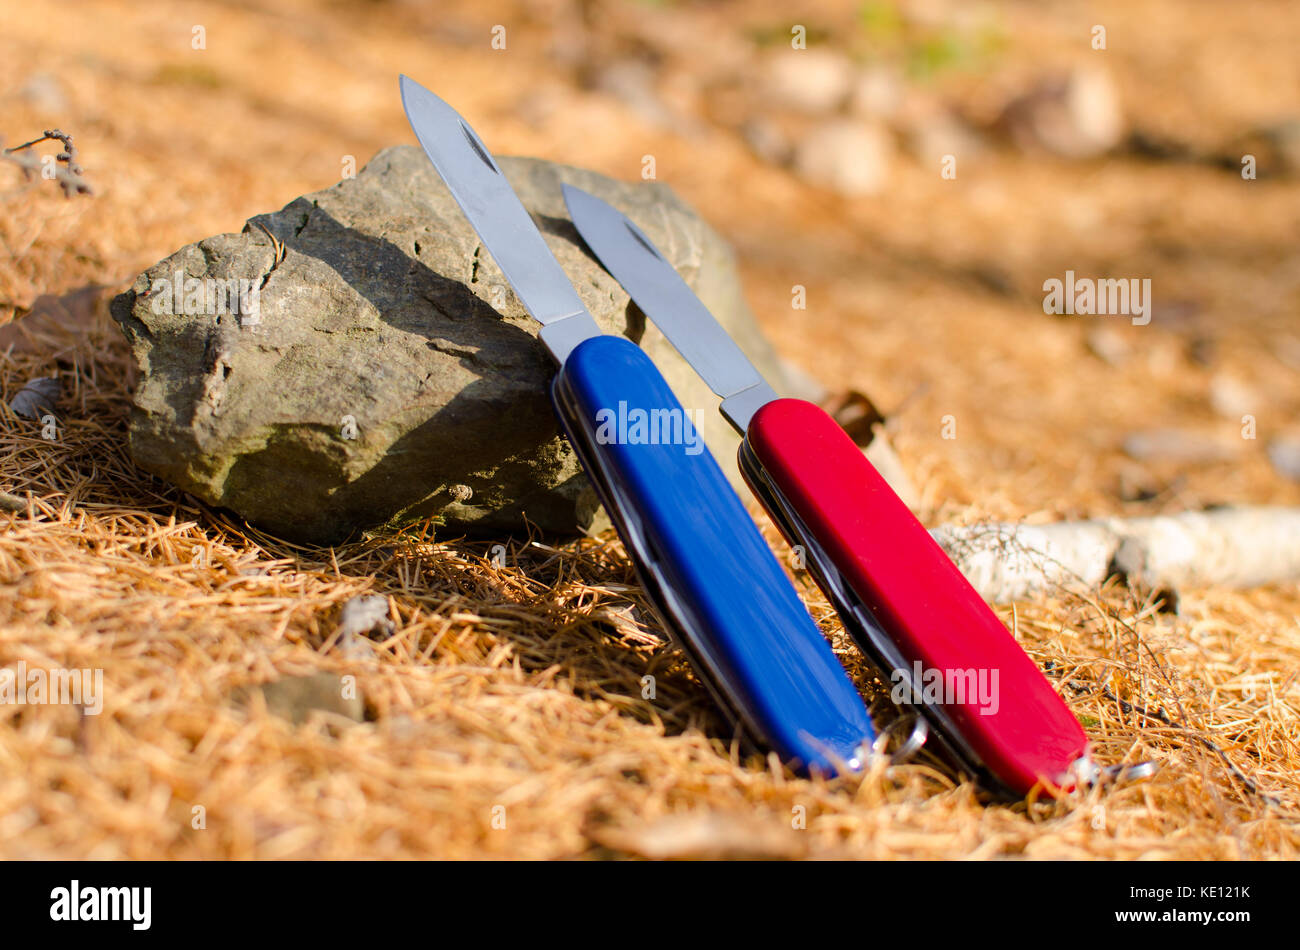 pocket knives on a stone Stock Photo